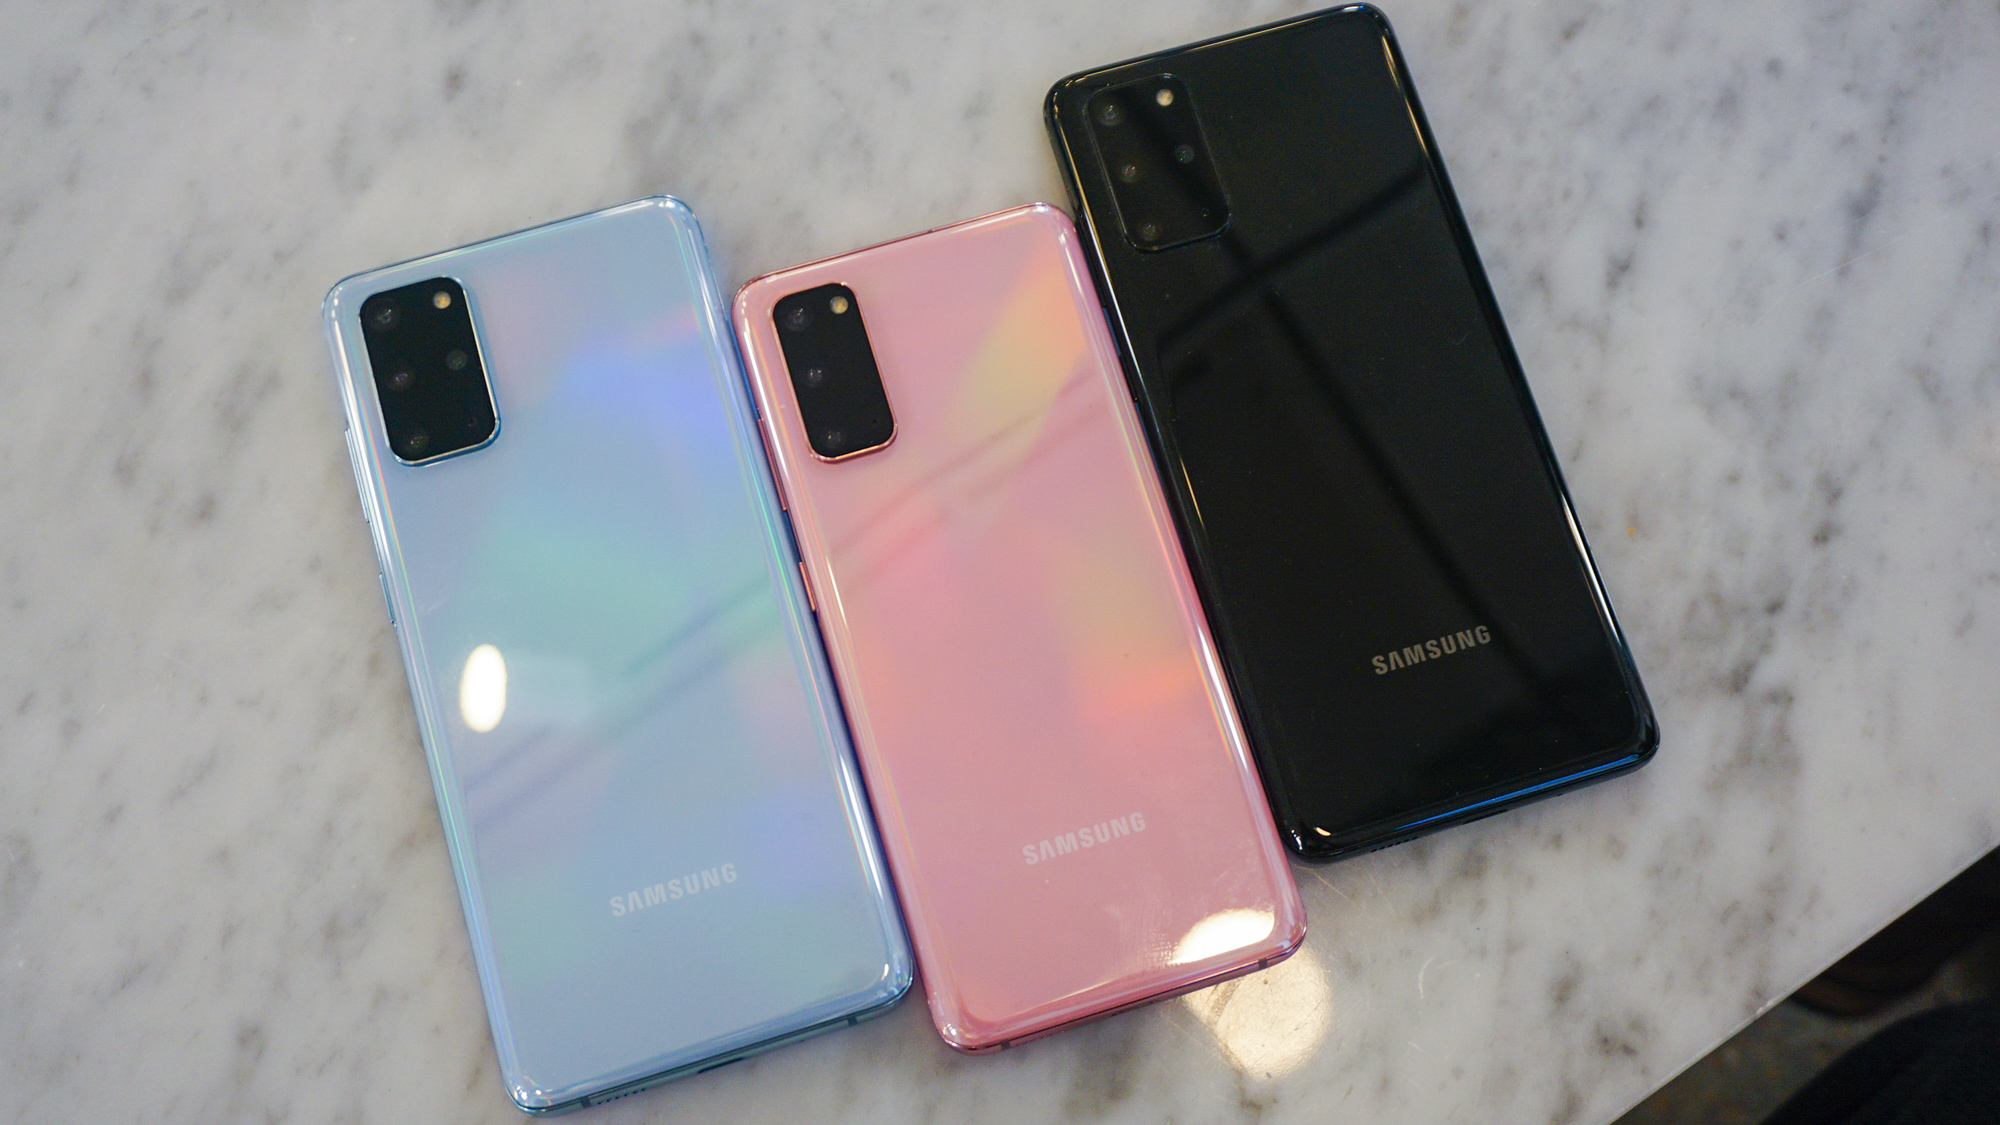 Smartphone cao cấp nhỏ gọn: Chọn Galaxy S20 hay Huawei P40? 2